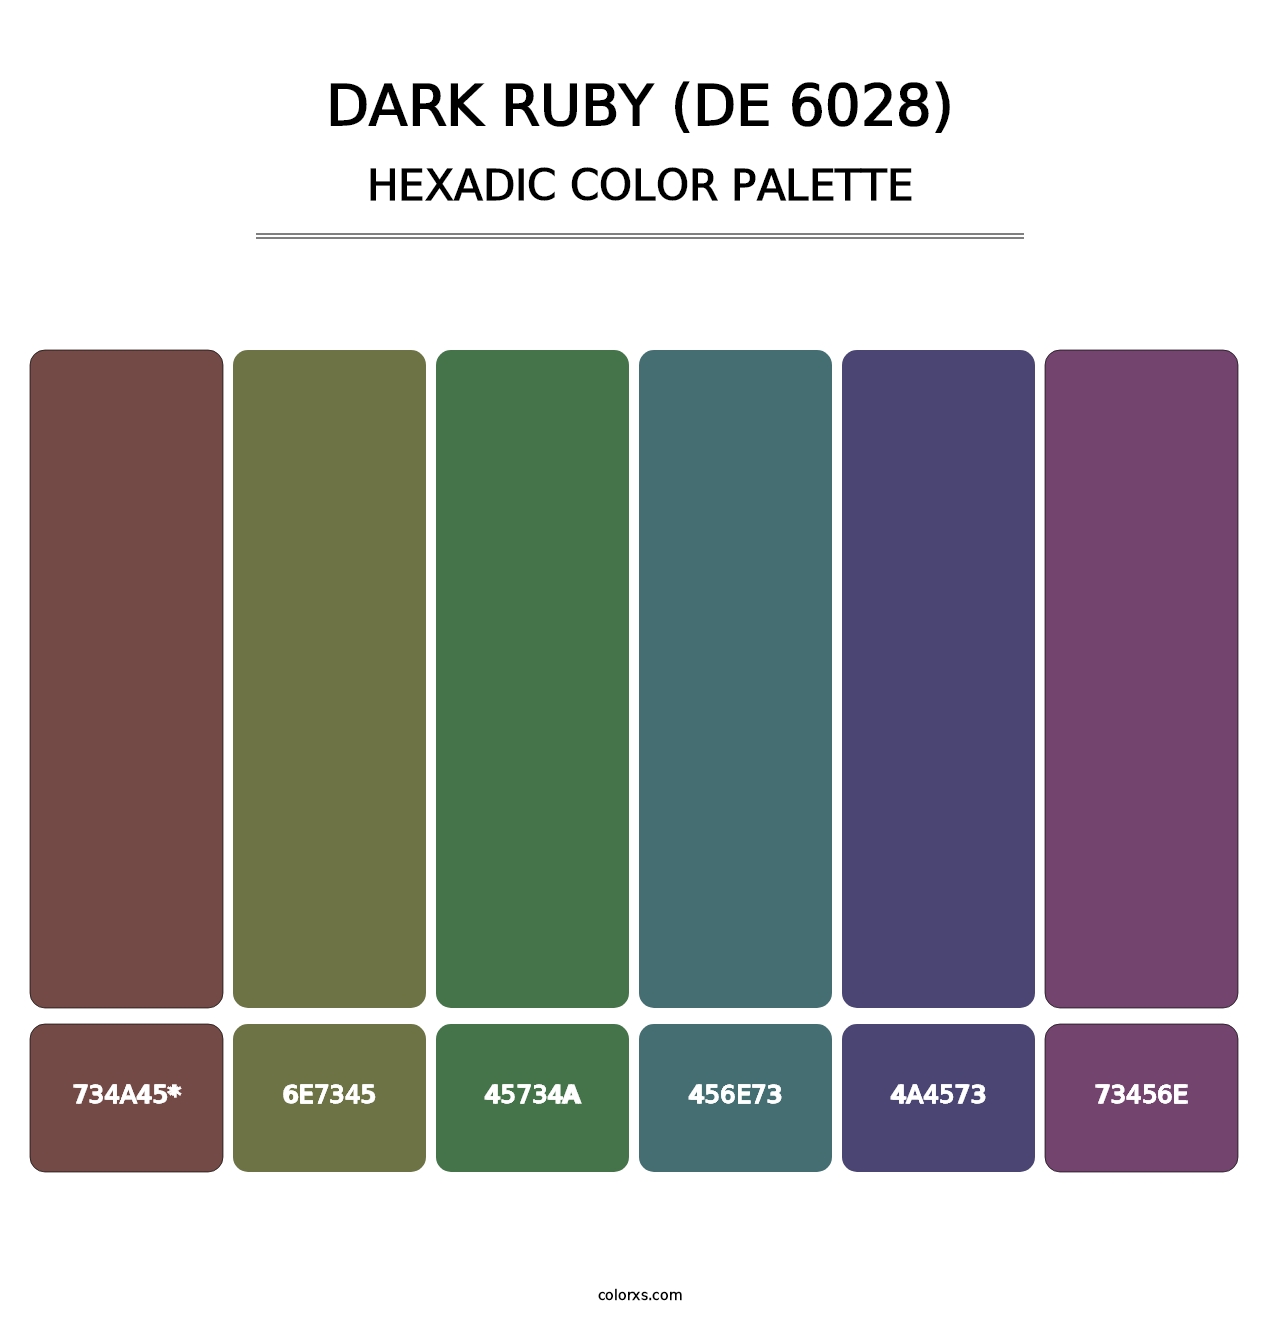 Dark Ruby (DE 6028) - Hexadic Color Palette